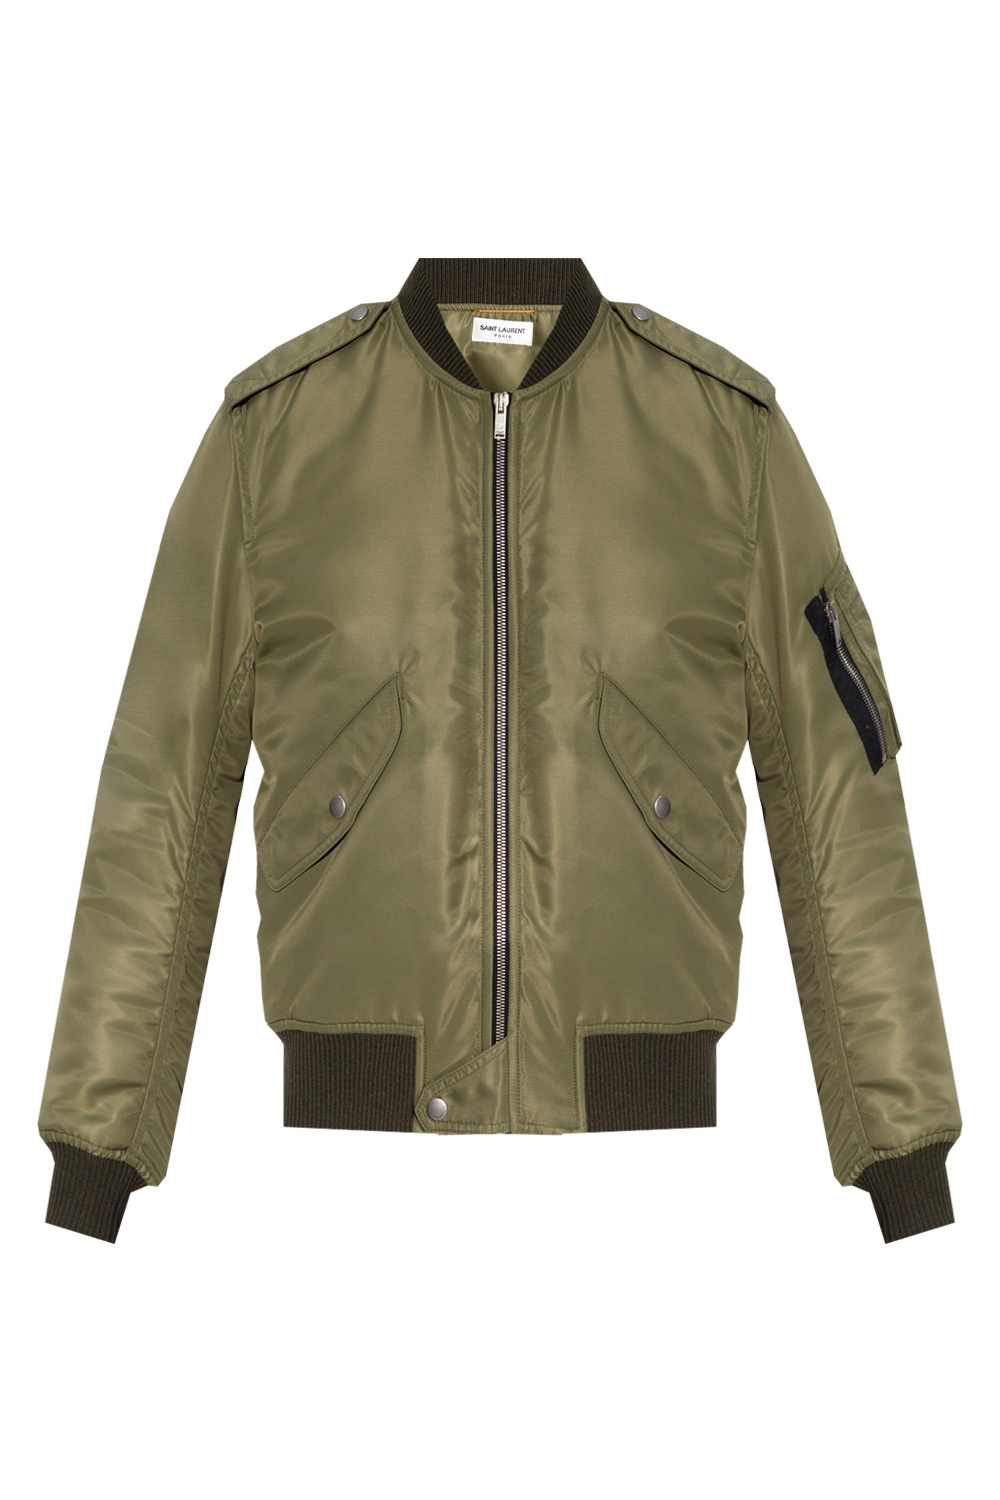 Louis Vuitton Padded Nylon Bomber Jacket Green Khaki. Size 38